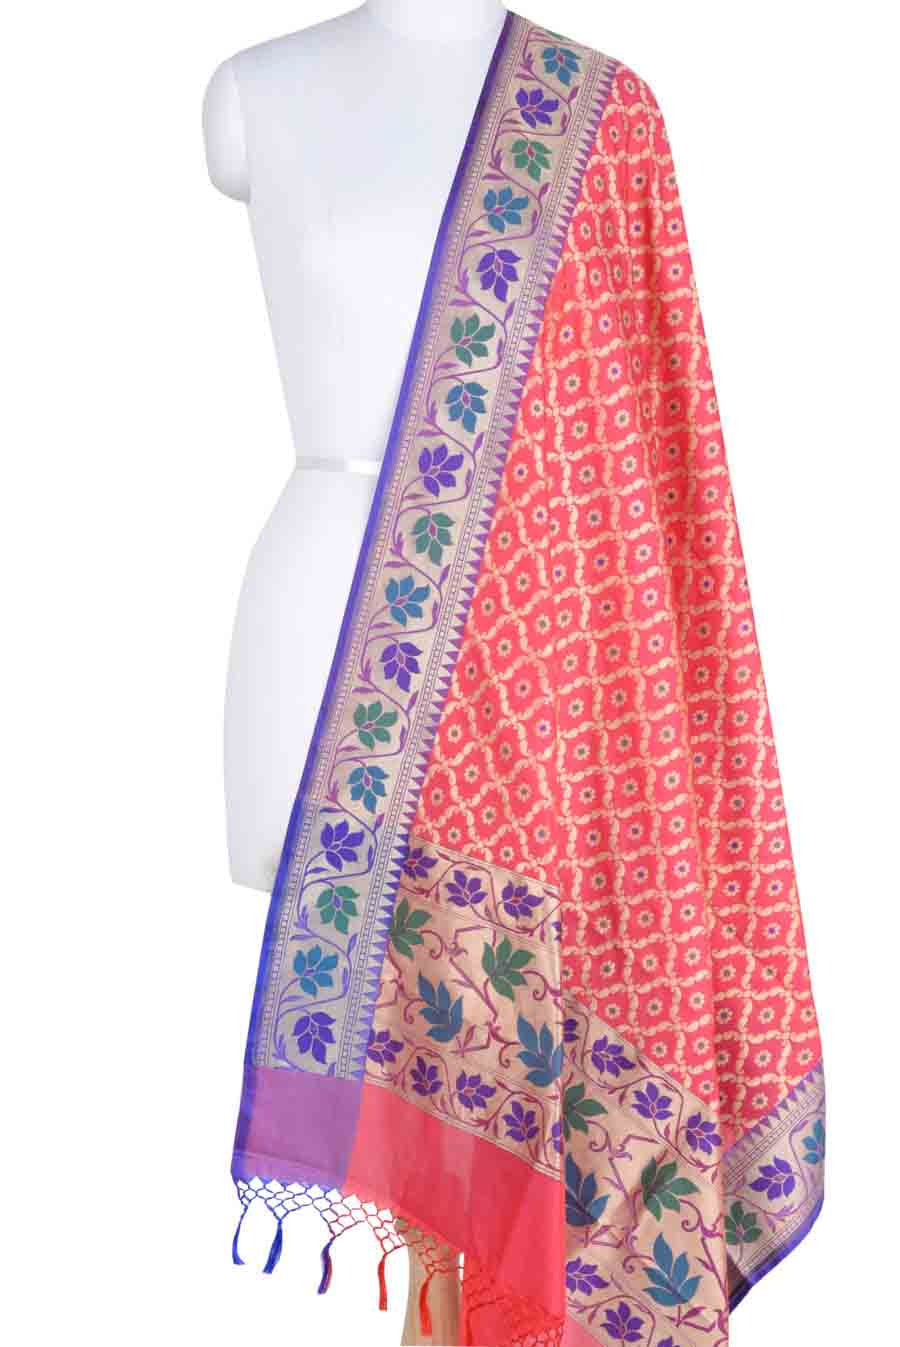 Pink Banarasi Dupatta with leaf jaal and floral motifs (1) Main